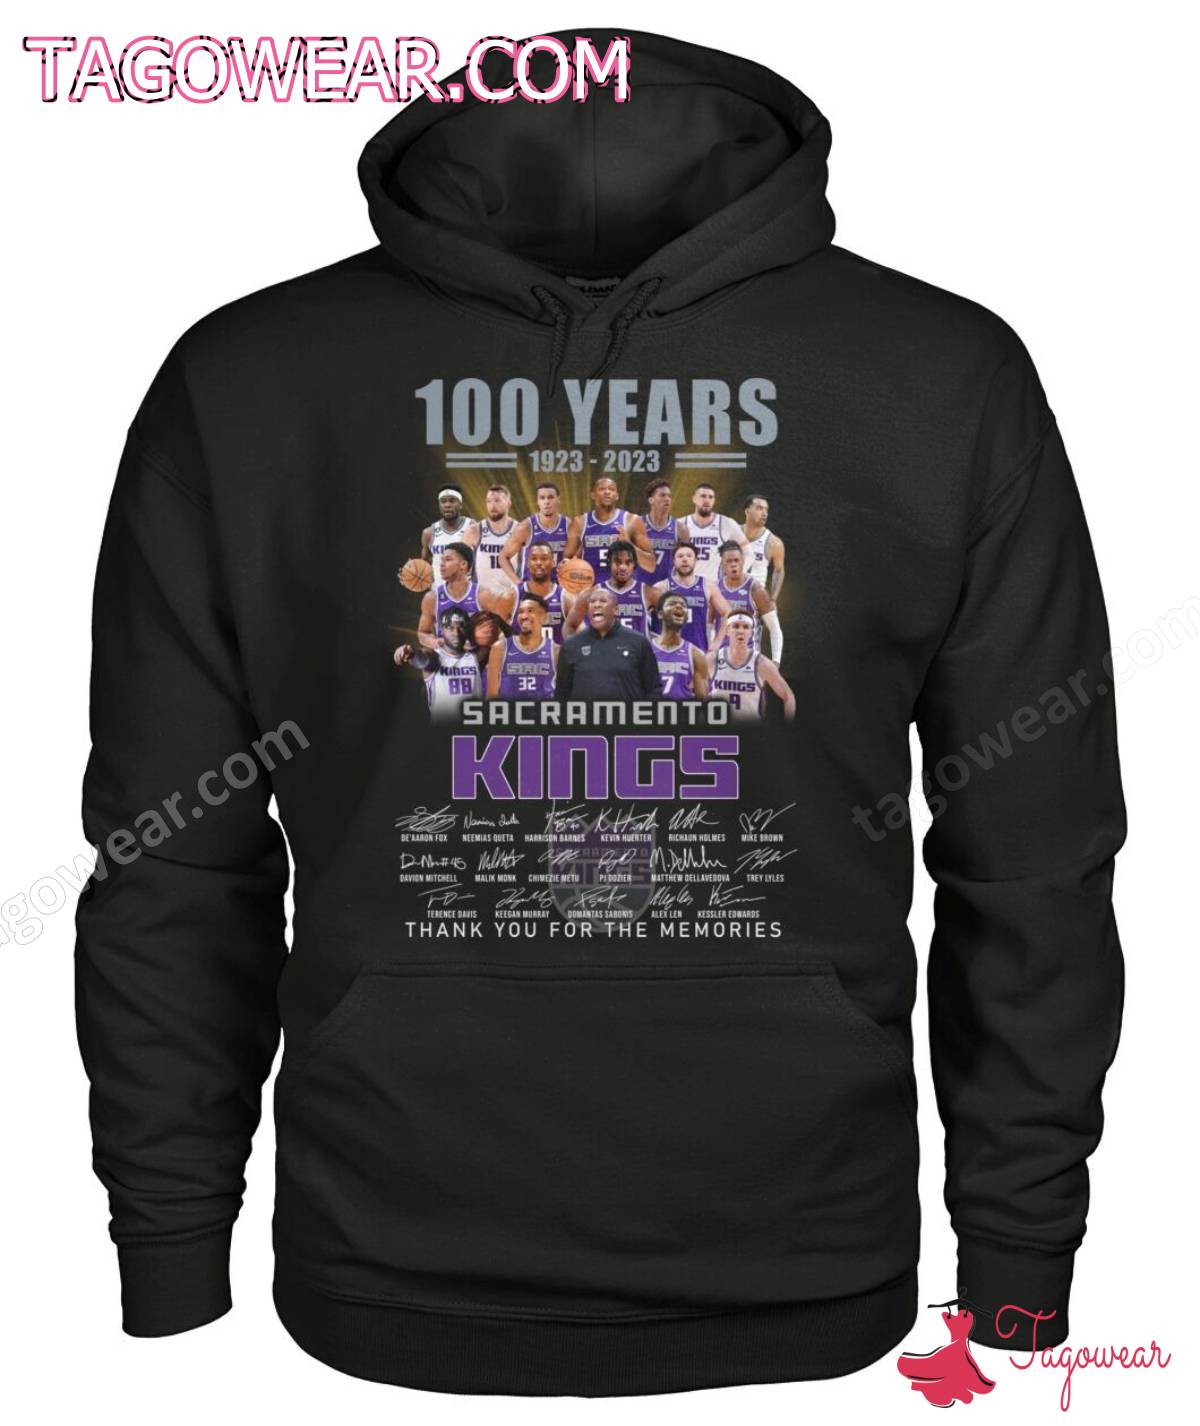 100 Years 1923-2023 Sacramento Kings Signatures Thank You For The Memories Shirt, Tank Top b